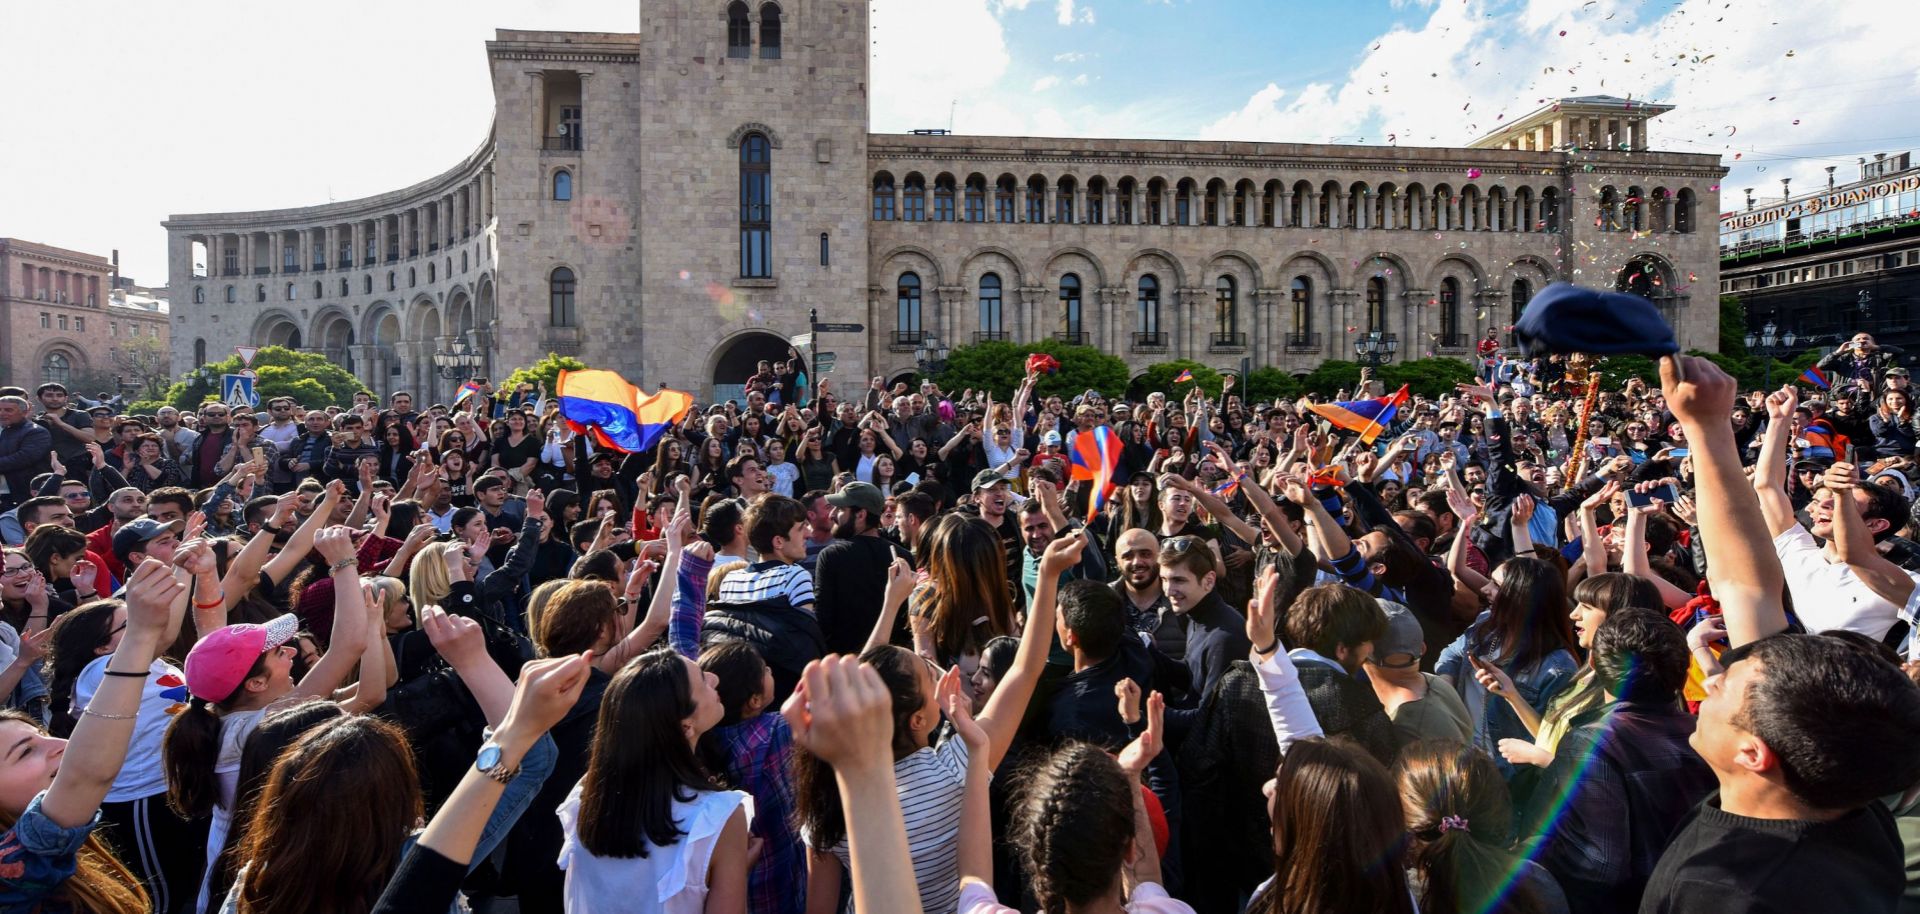 Armenians in the capital Yerevan celebrate Serzh Sarkisian's resignation as prime minister on April 23, 2018.